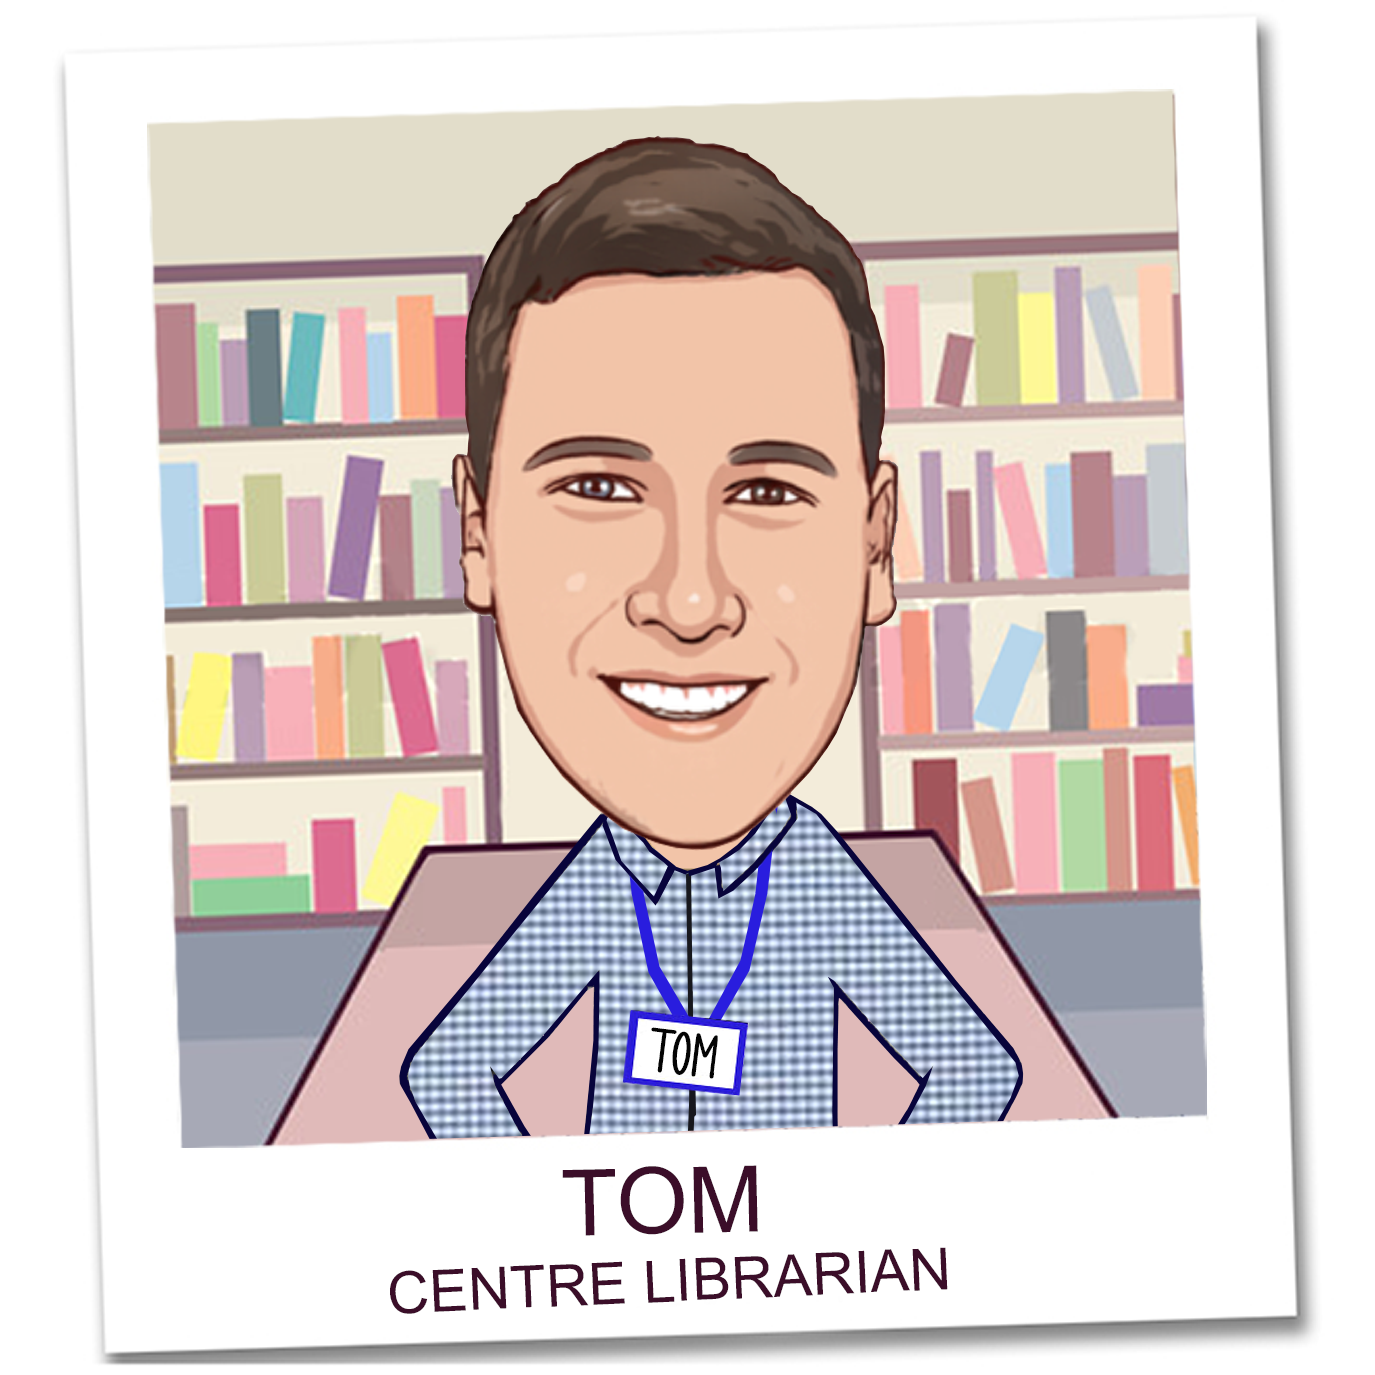 Tom, Centre Librarian